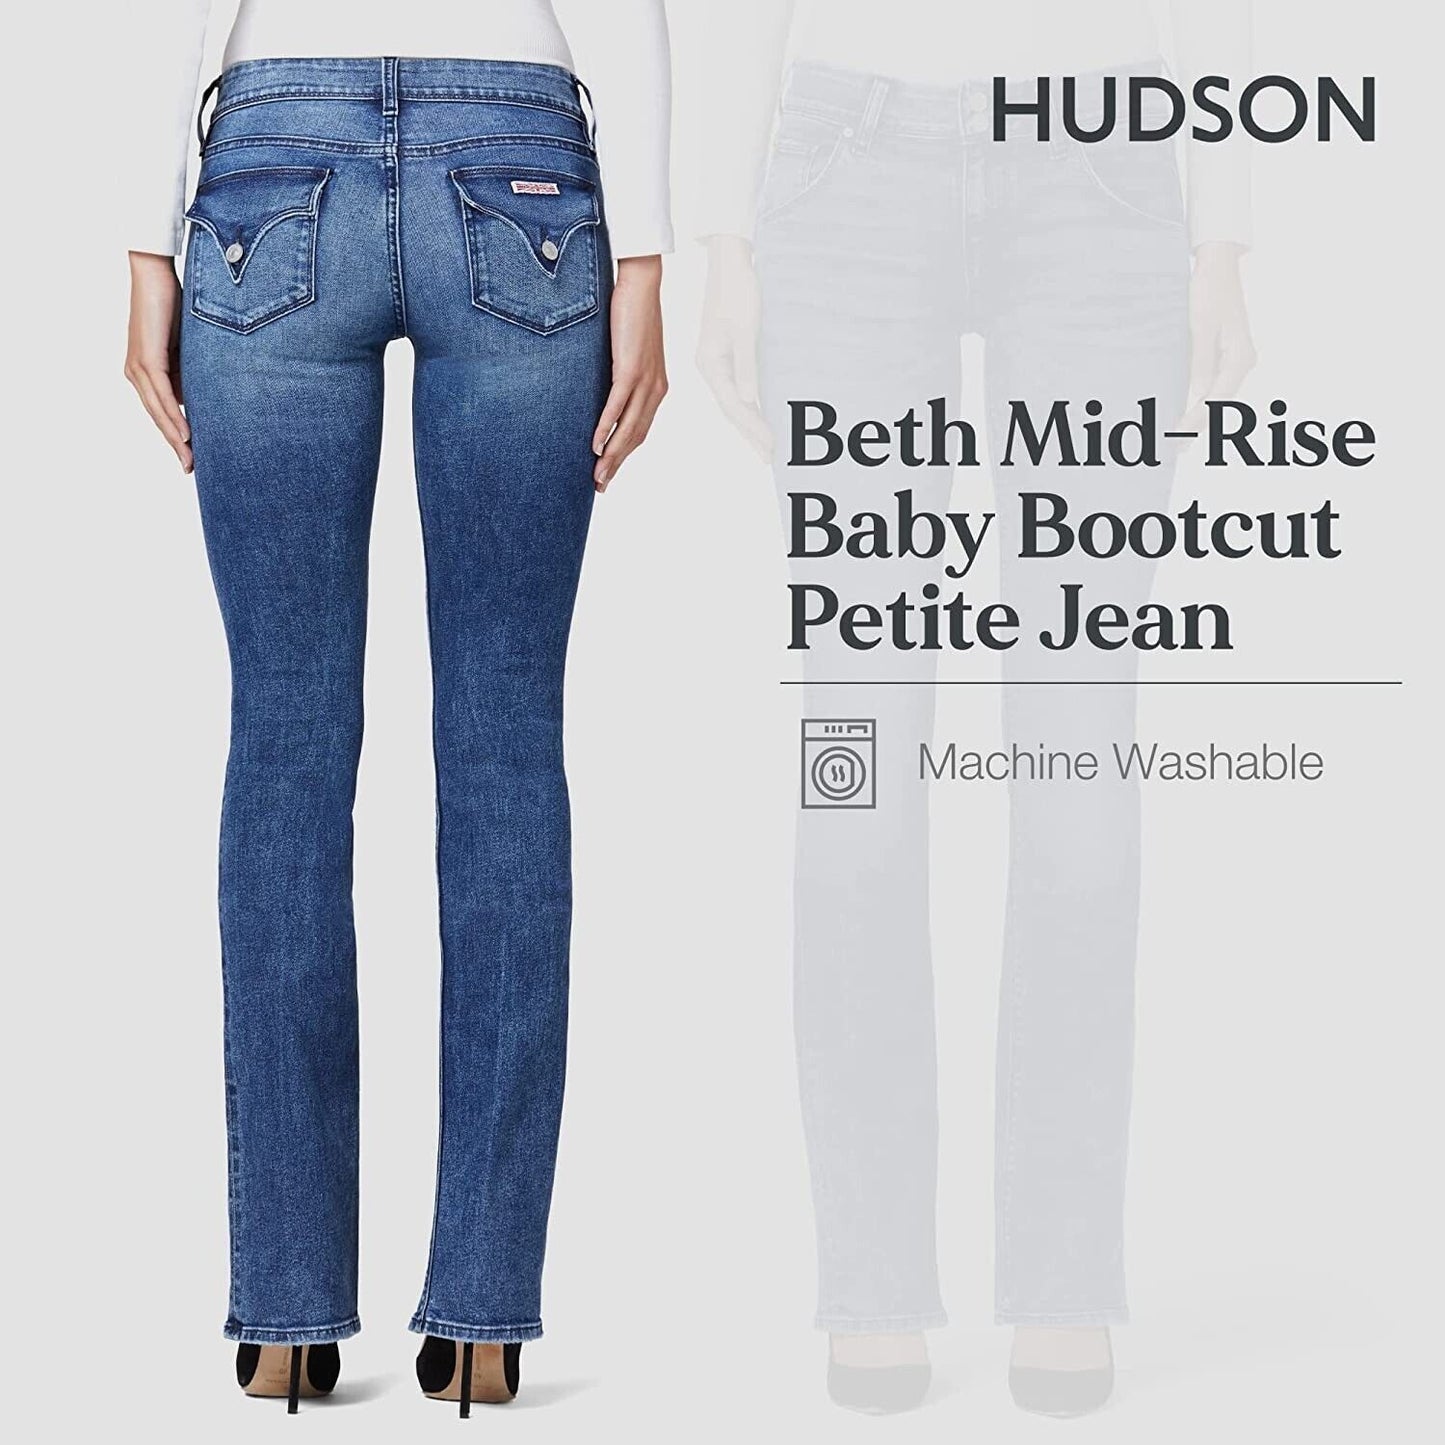 HUDSON Jeans Women's Beth Mid Rise, Baby Bootcut Jean 34